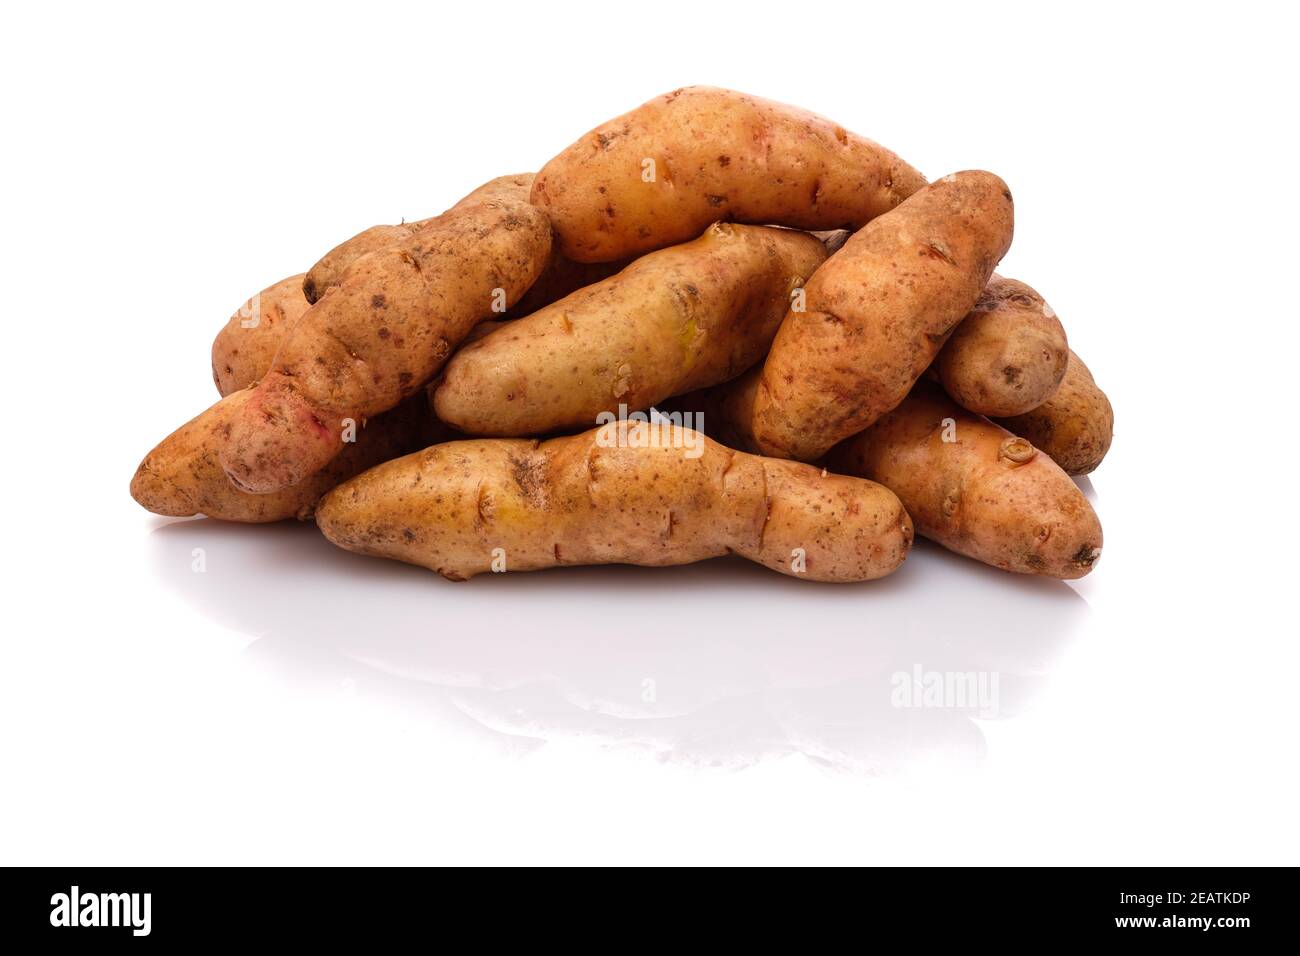 Raw bamberger hÃ¶rnle potatoes on white Stock Photo